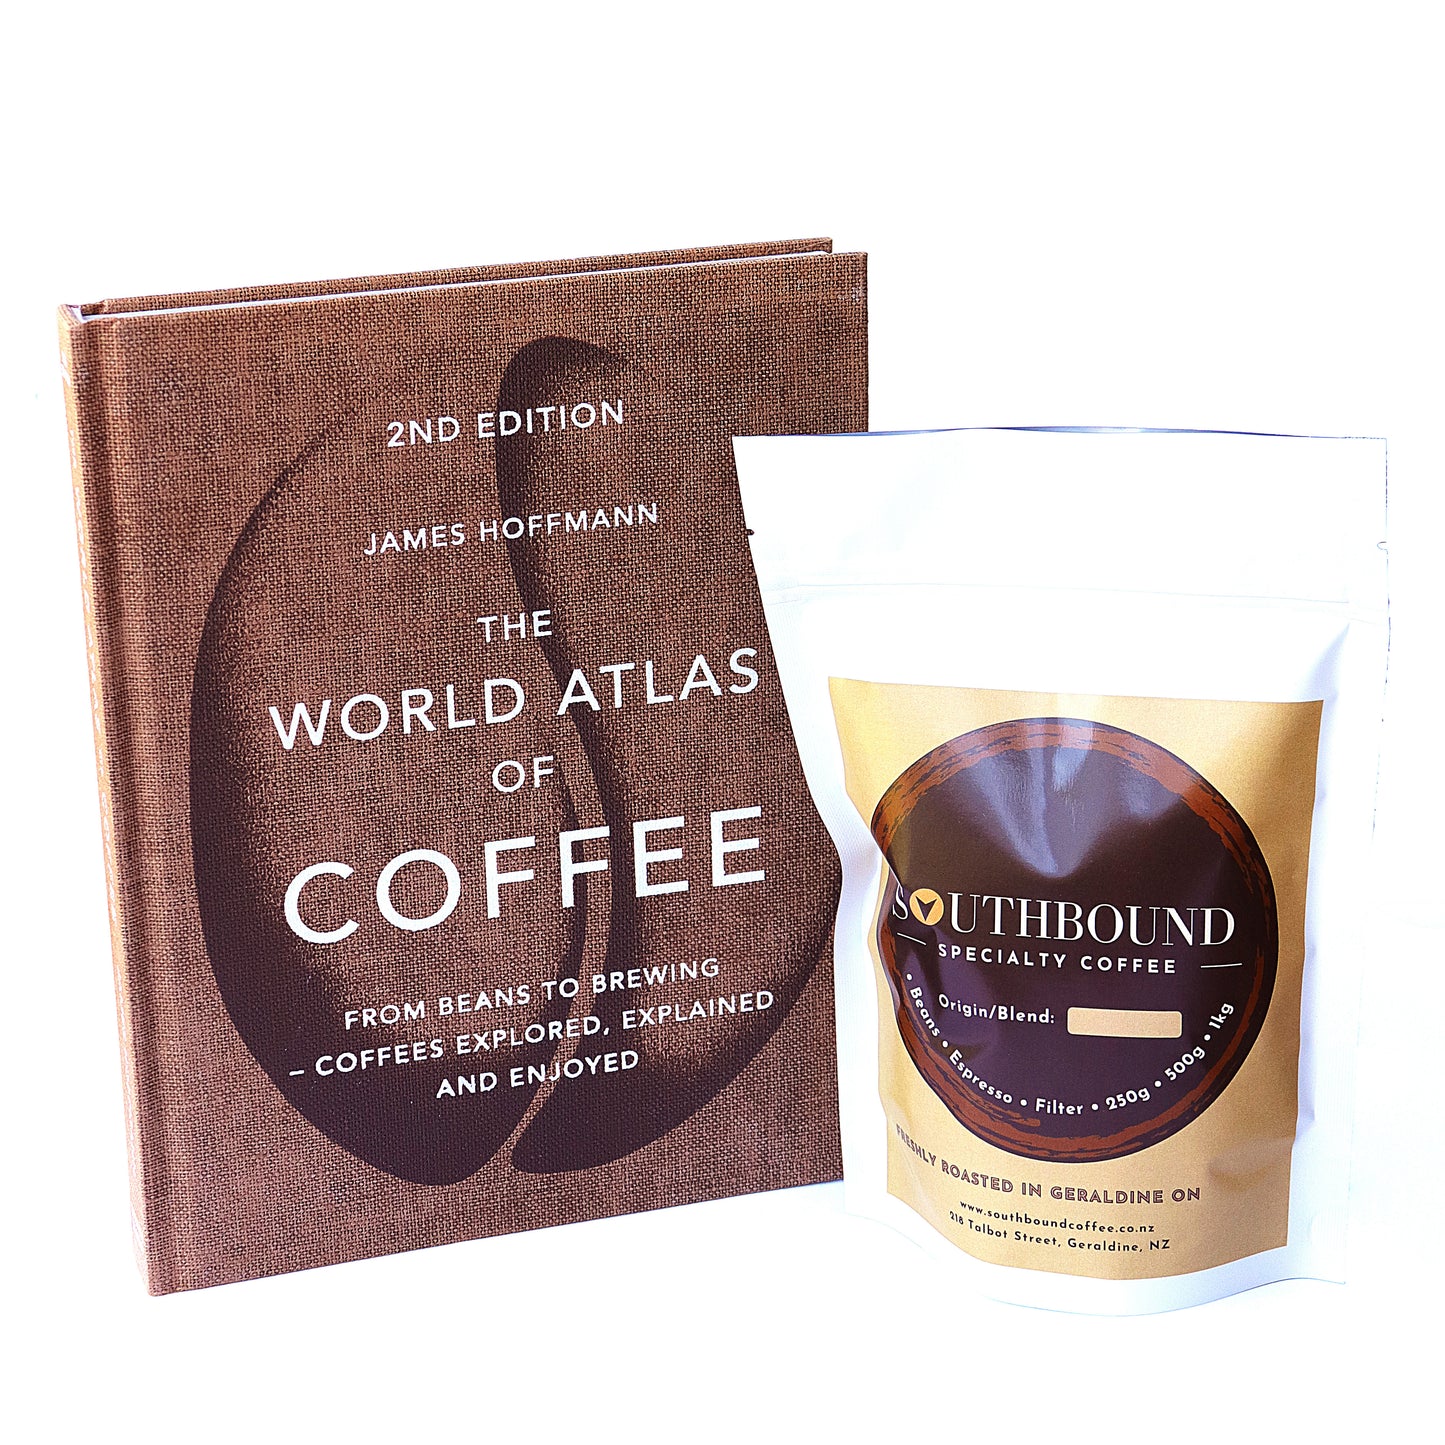 The World Atlas of Coffee by J Hoffmann